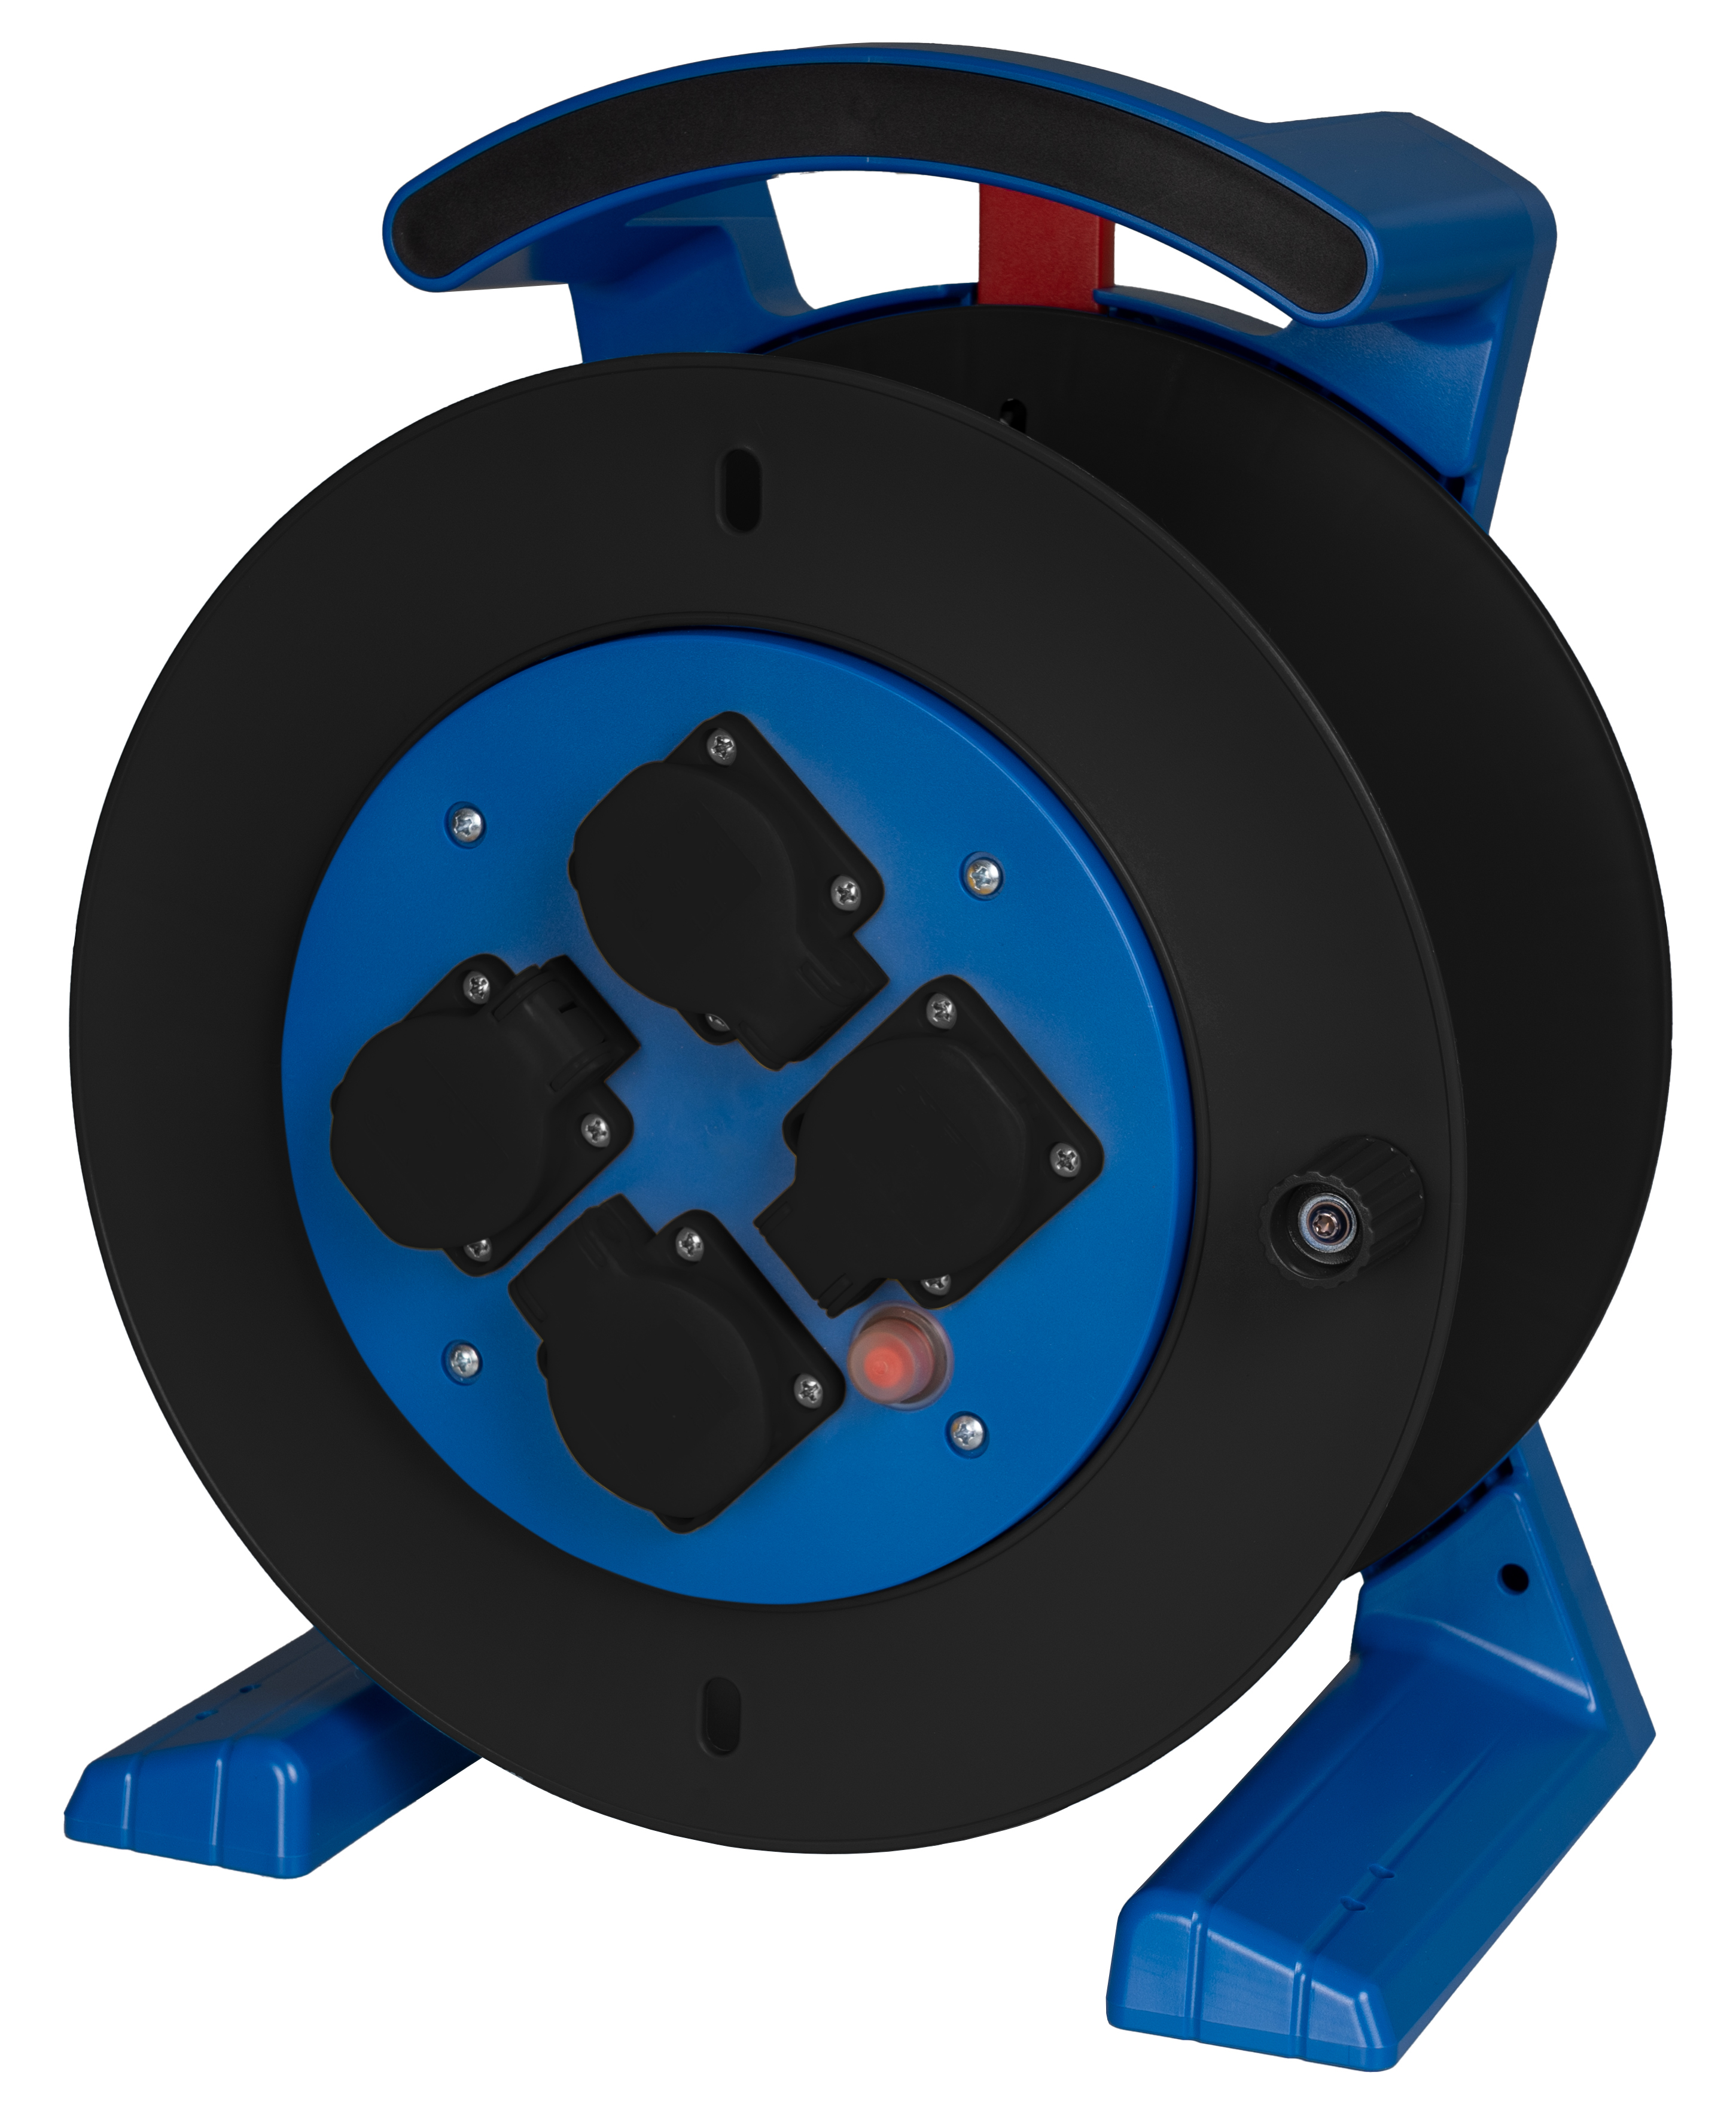 Leerkabeltrommel in blau-schwarz, 4 x Schutzkontakt-Steckdose JUMBO L 2.0